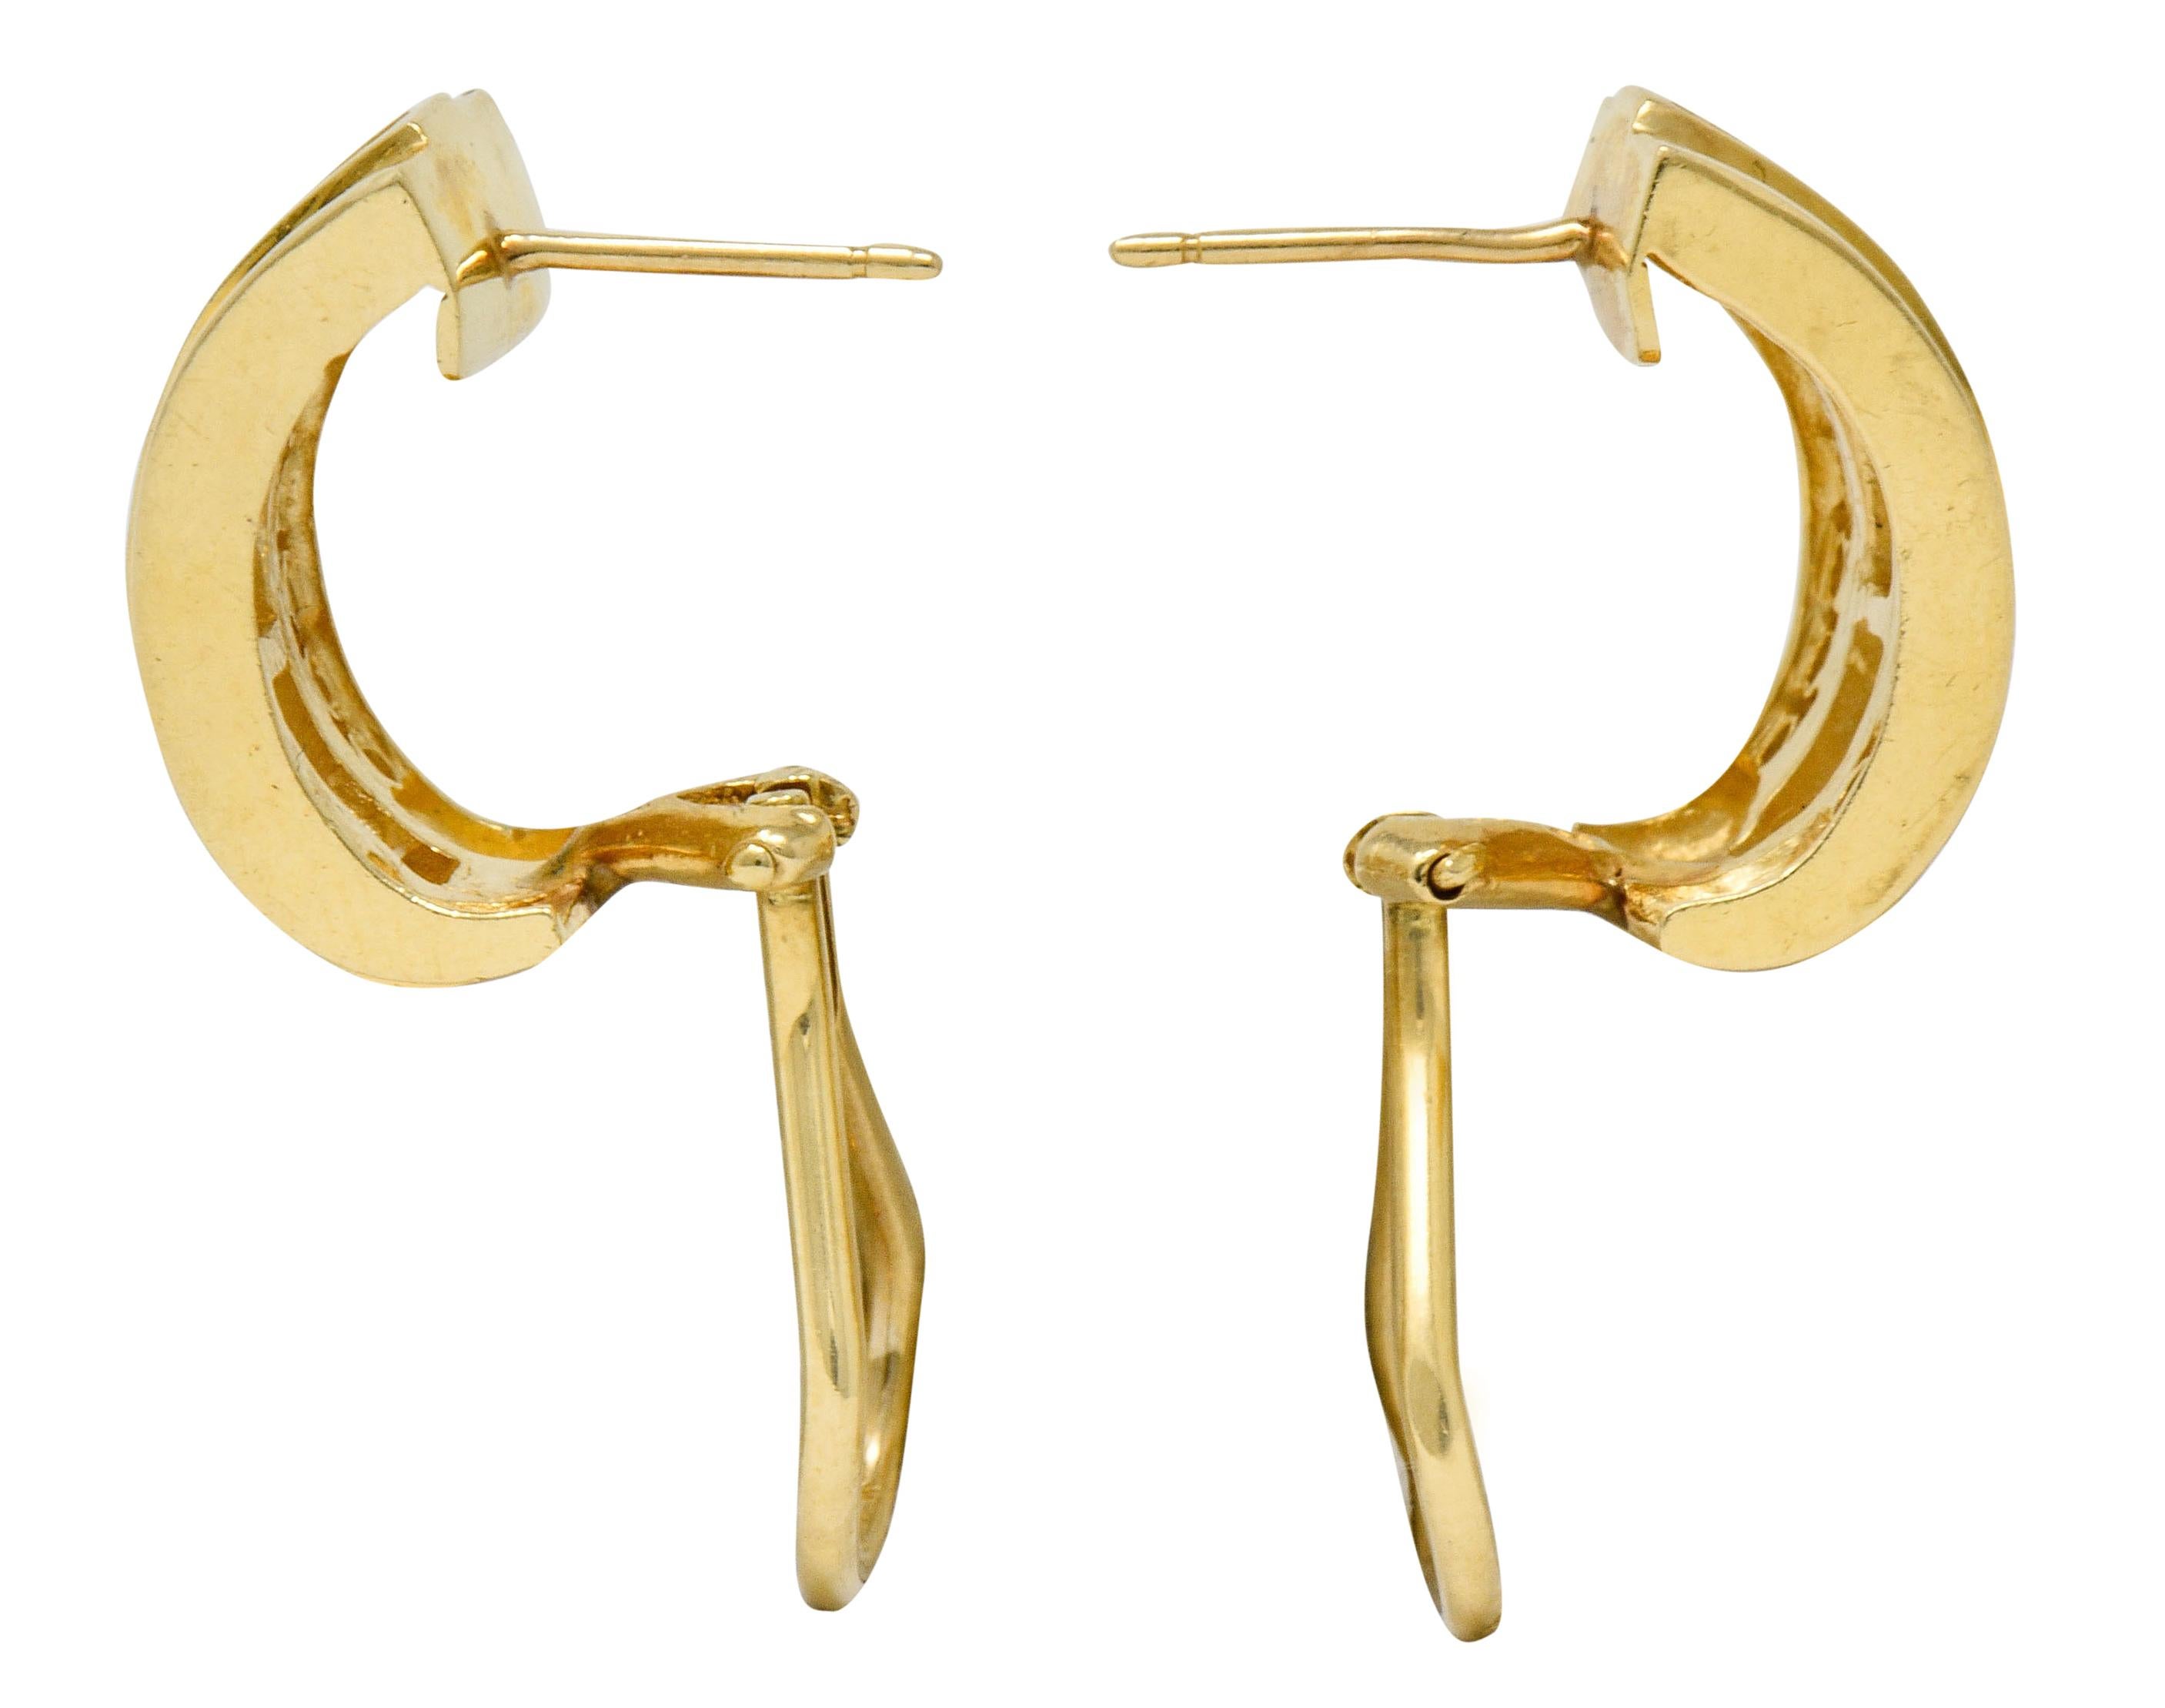 Brilliant Cut Vintage 2.75 Carat Diamond 14 Karat Gold Channel Set J Hoop Earrings